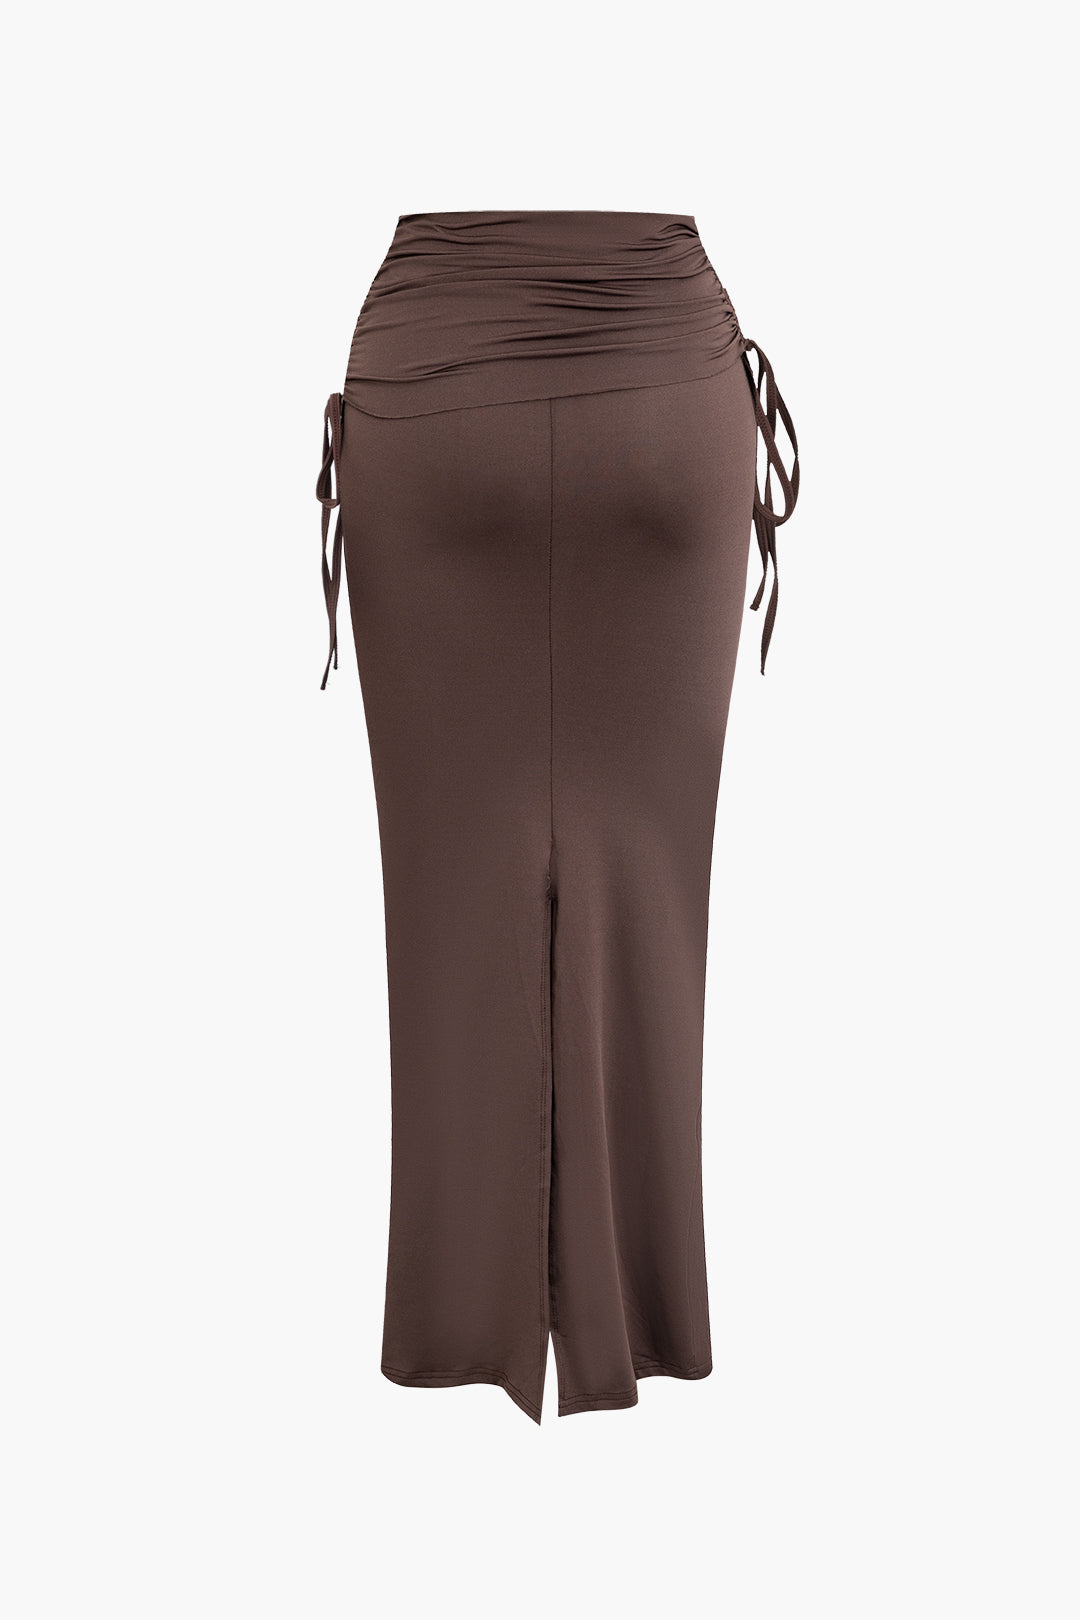 Asymmetrical Drawstring Short Sleeve Crop Top And Maxi Skirt Set